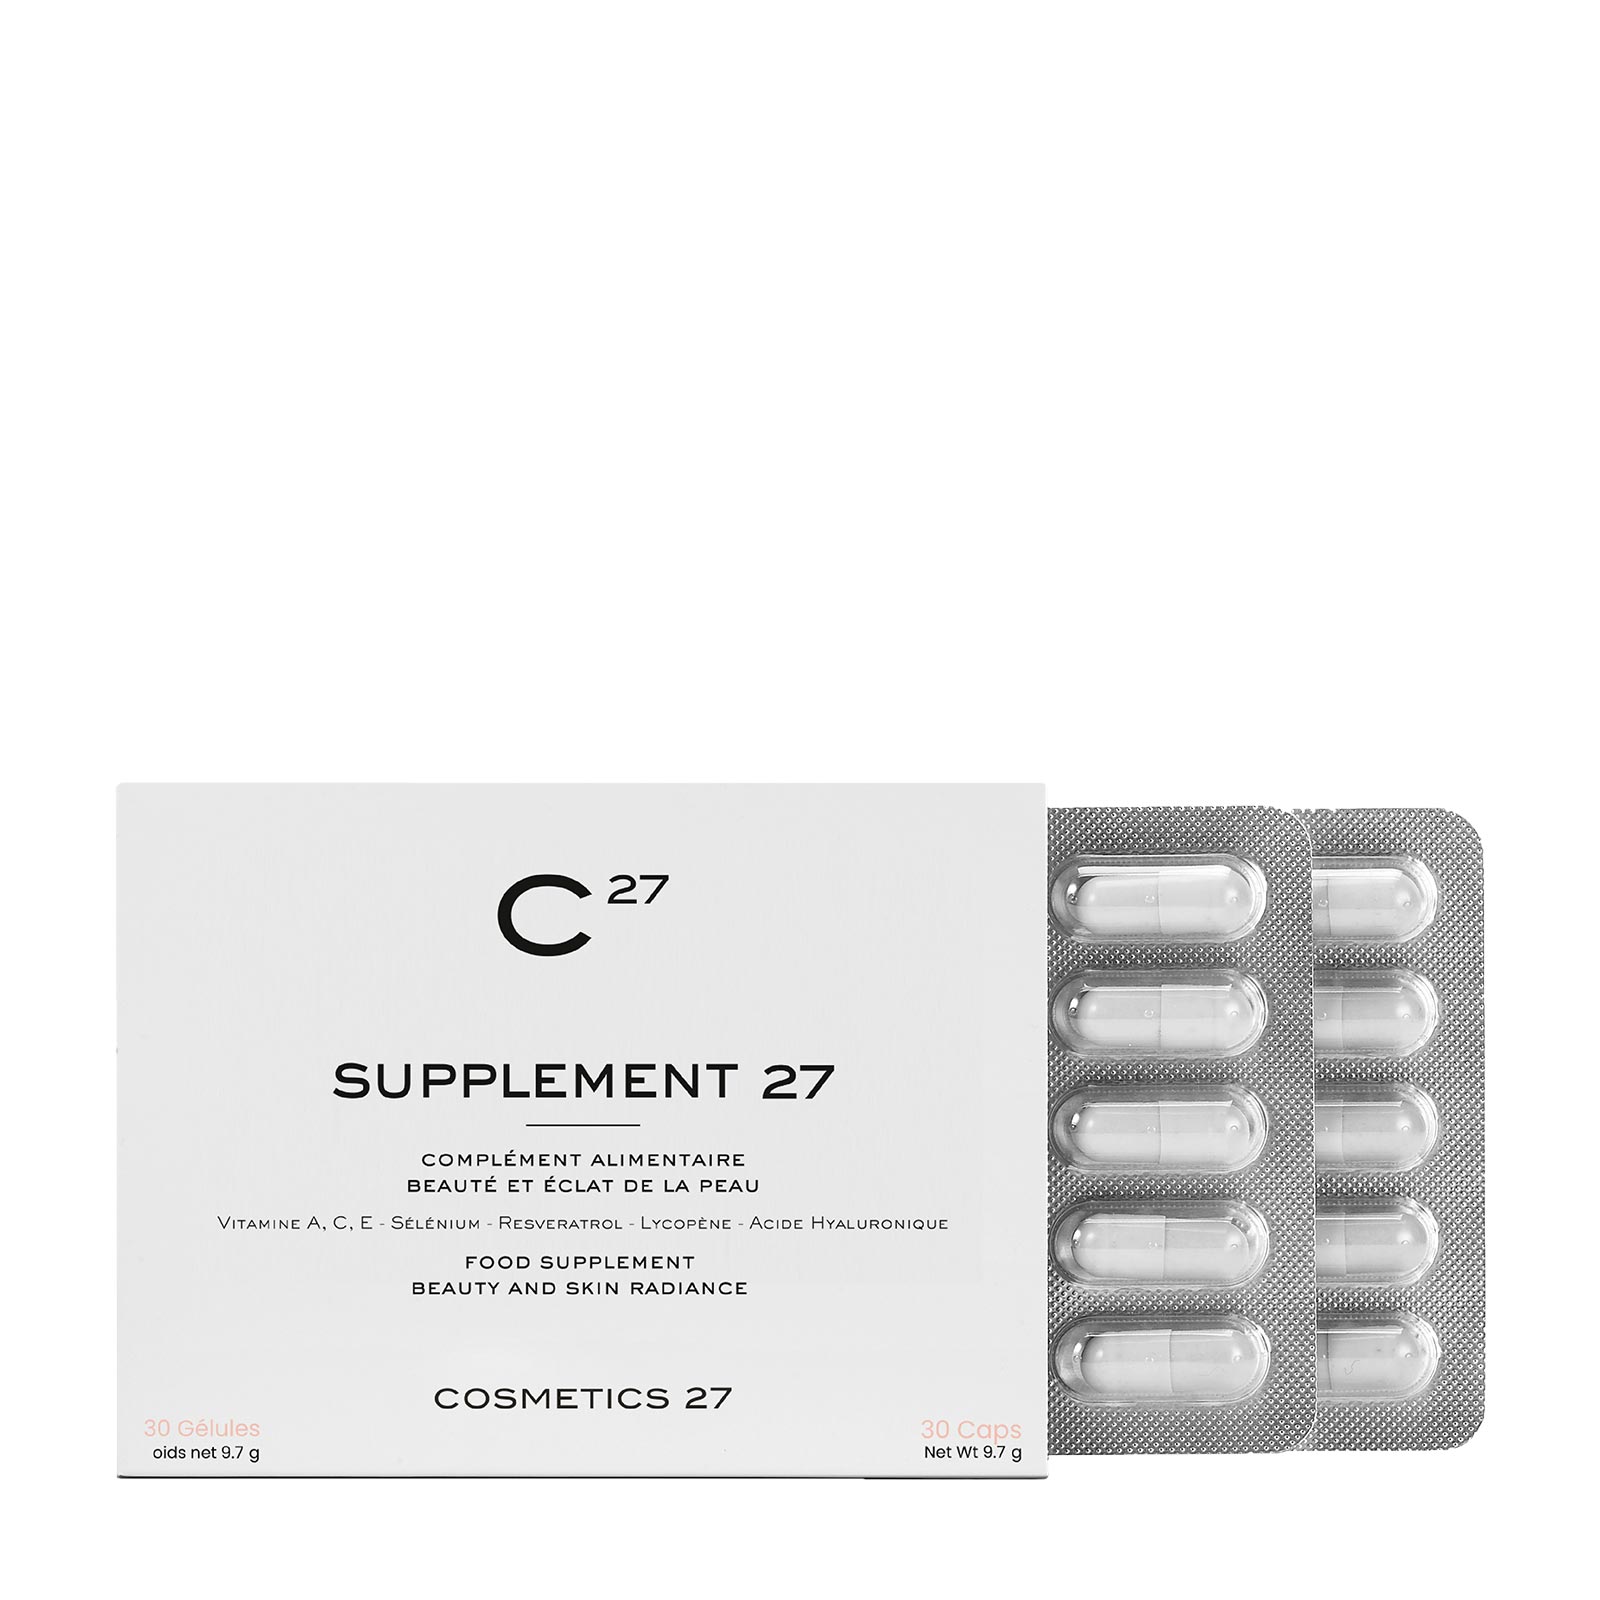 Cosmetics 27 Supplement 27